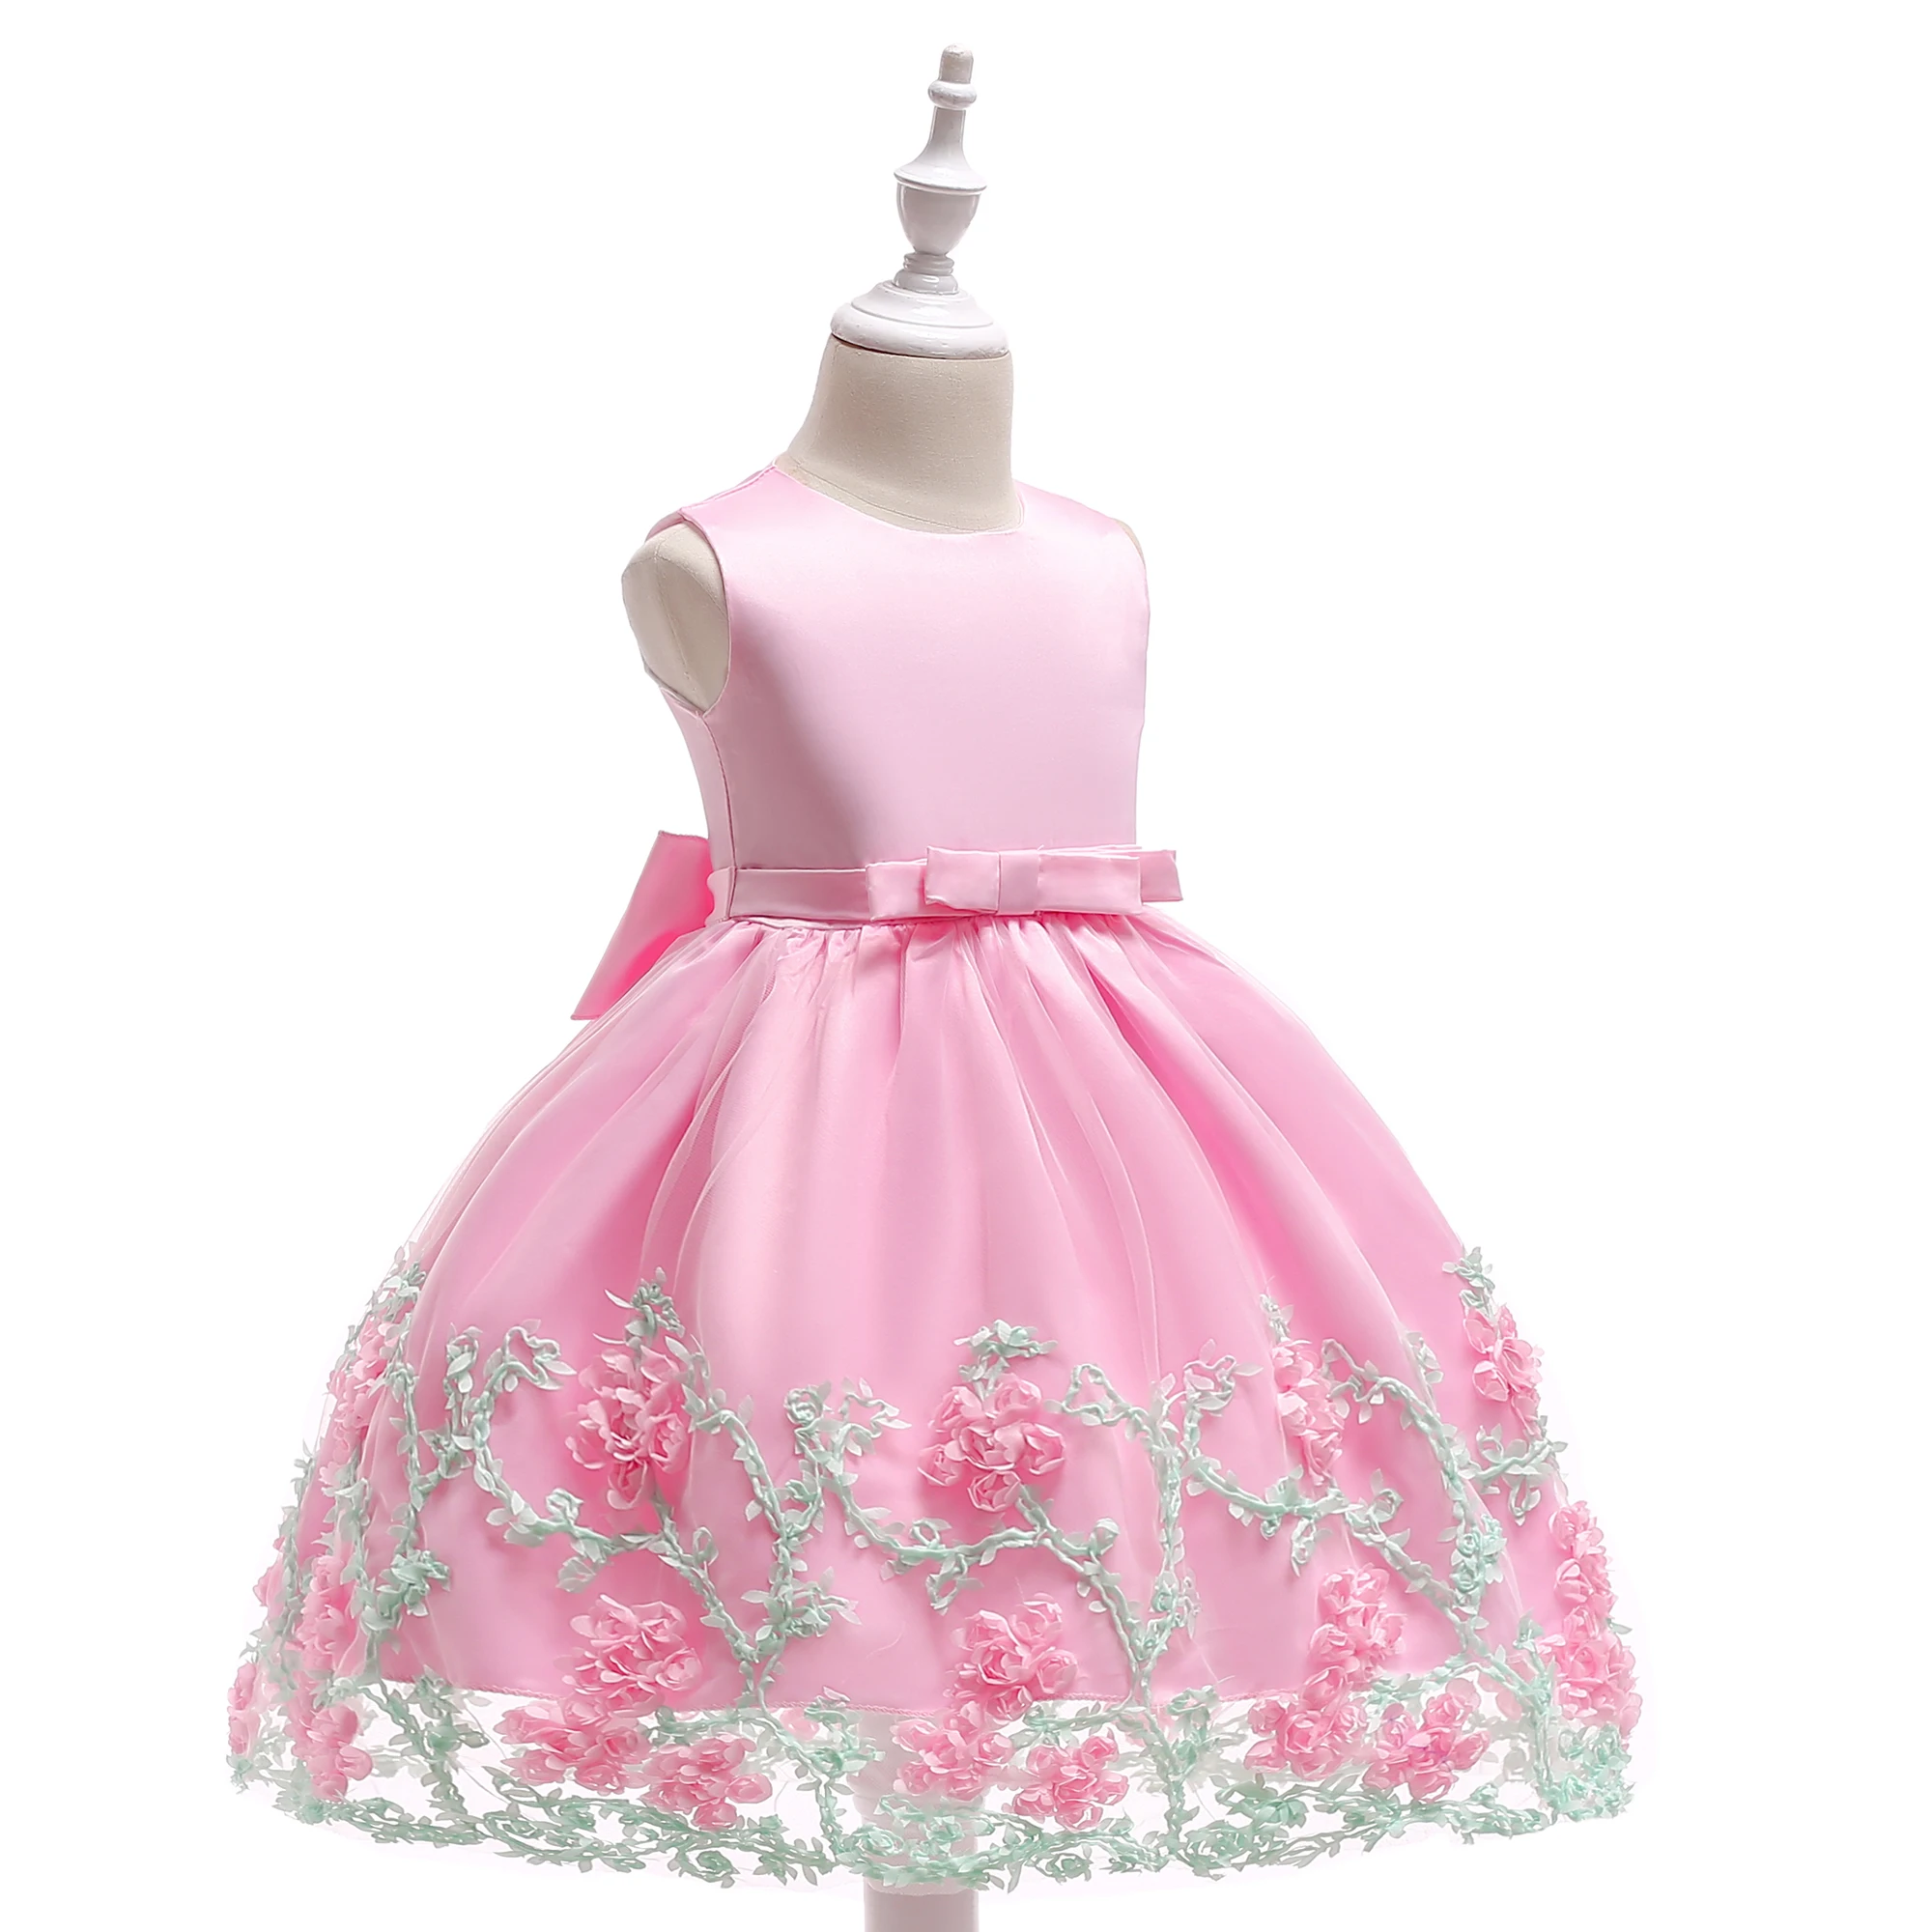 

MQATZ Online Shopping Summer Kids Fancy Boutique Clothing Lovely Flower Girl birthday Party Dress